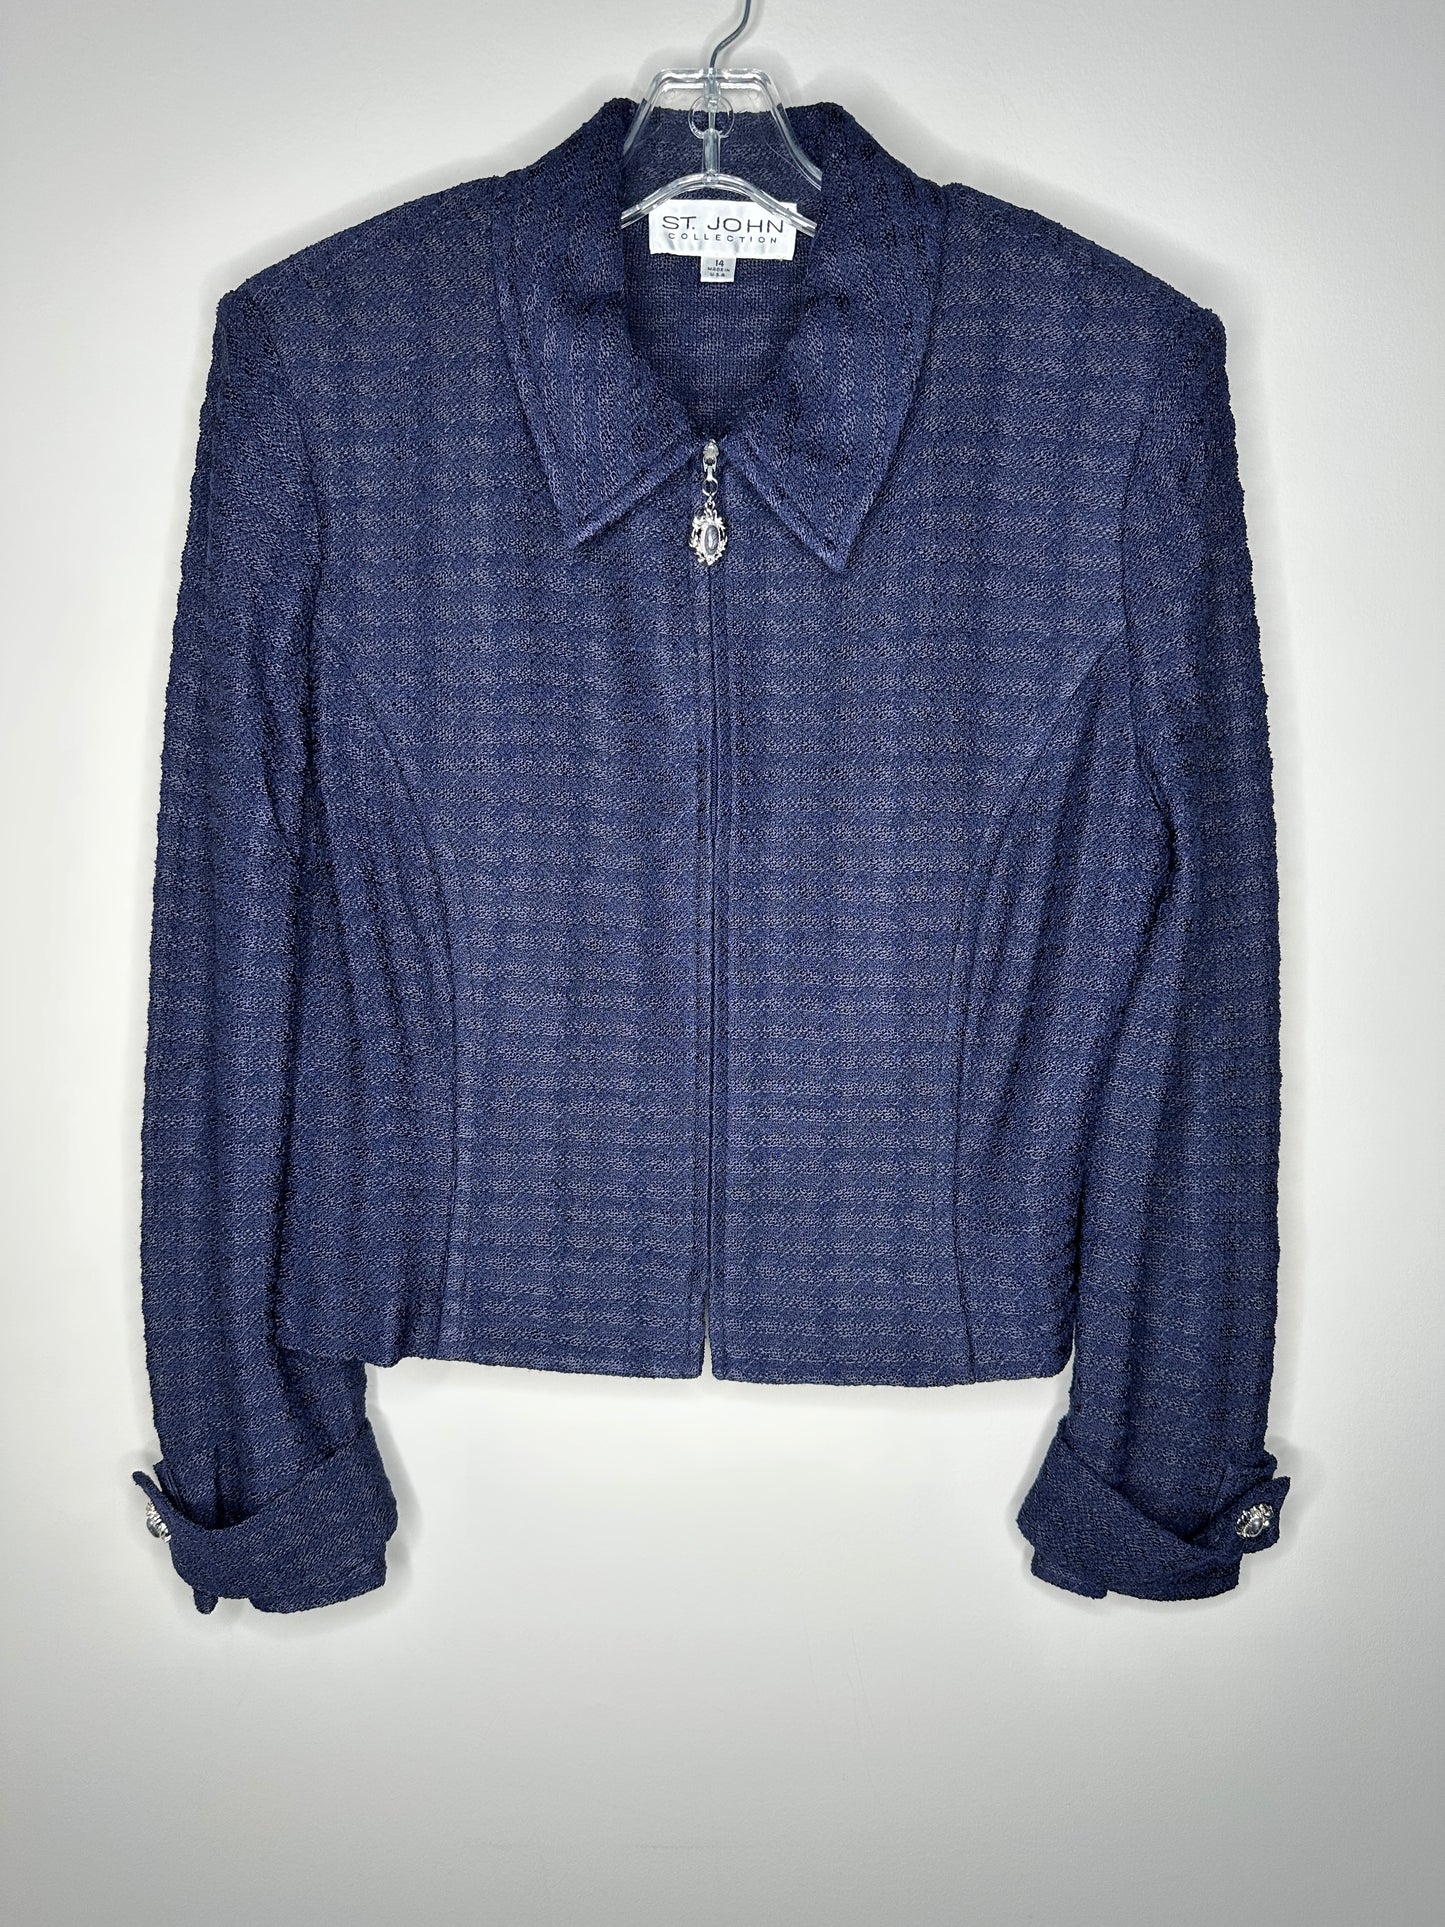 St. John Collection Size 14 Navy Blue Santana Knit Full-Zip Jacket